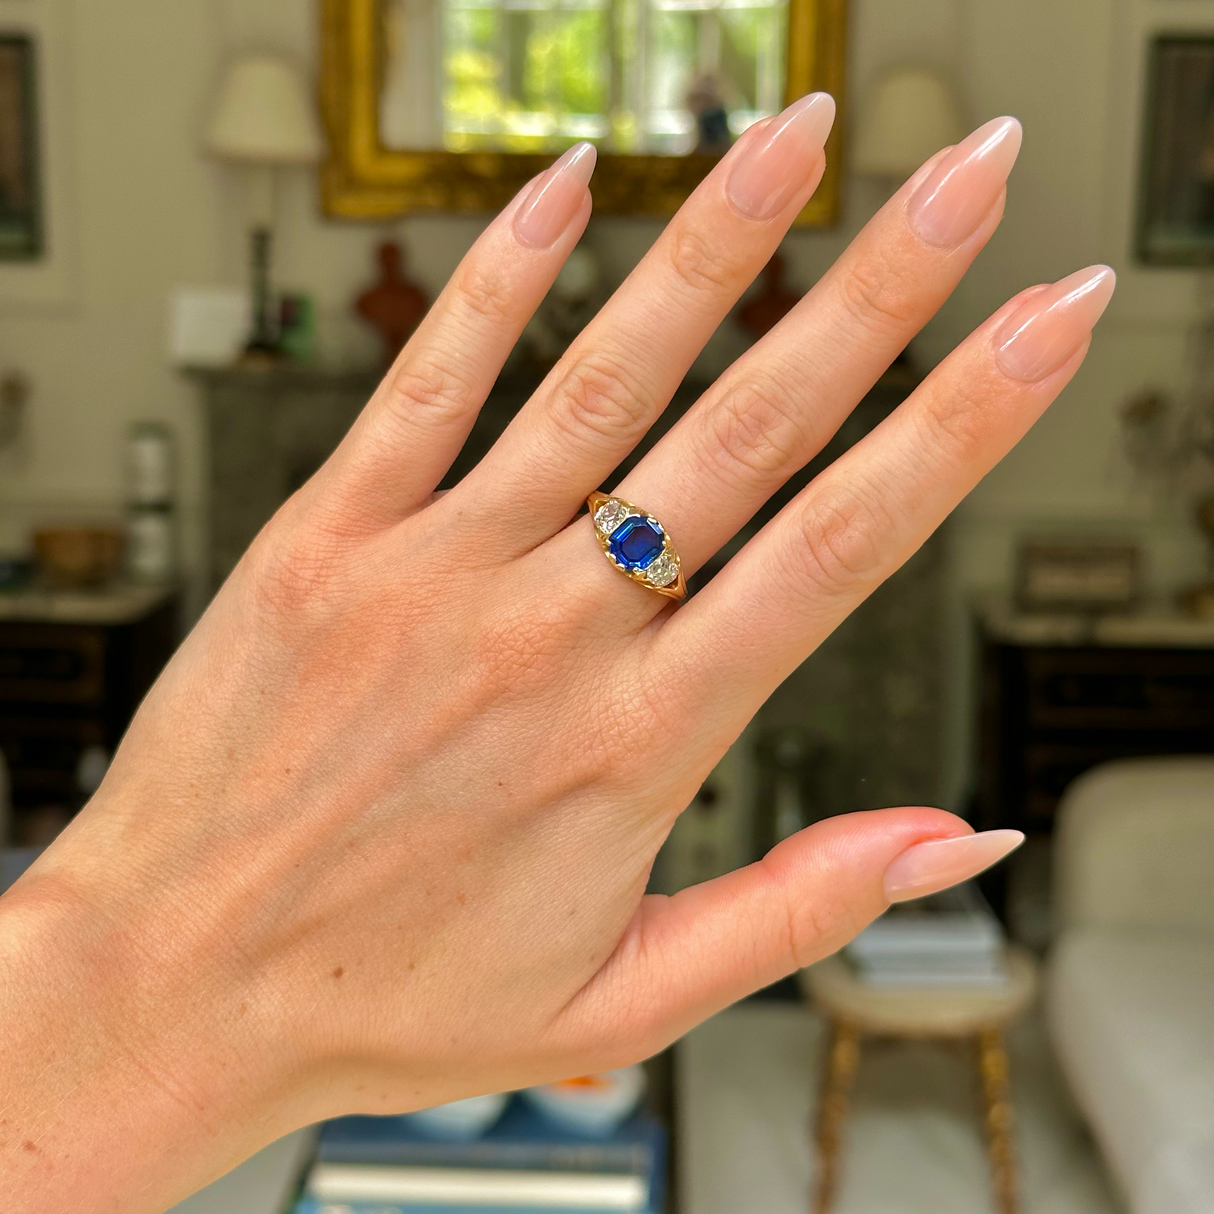 Engagement | Victorian, Burmese sapphire & diamond ring